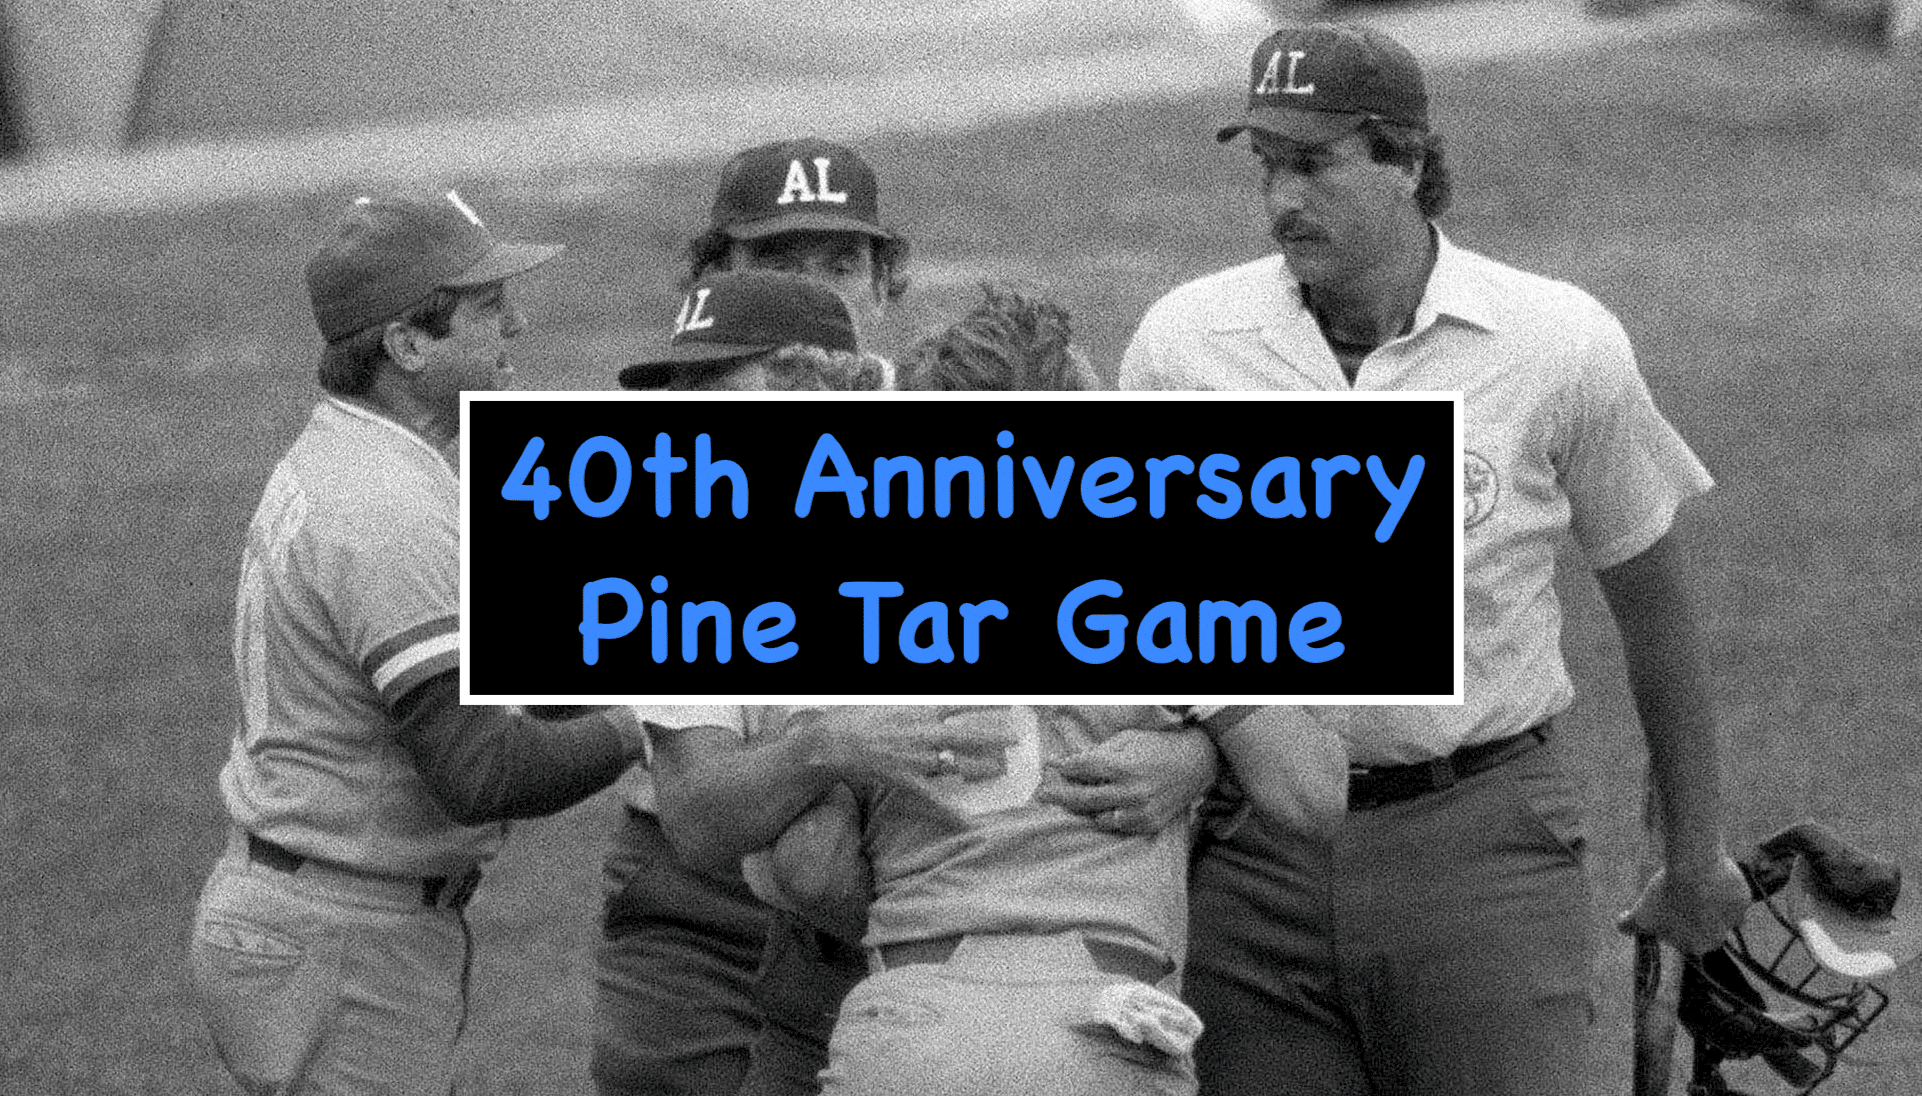 Why Do Baseball Players Use Pine Tar? Here's the Reason